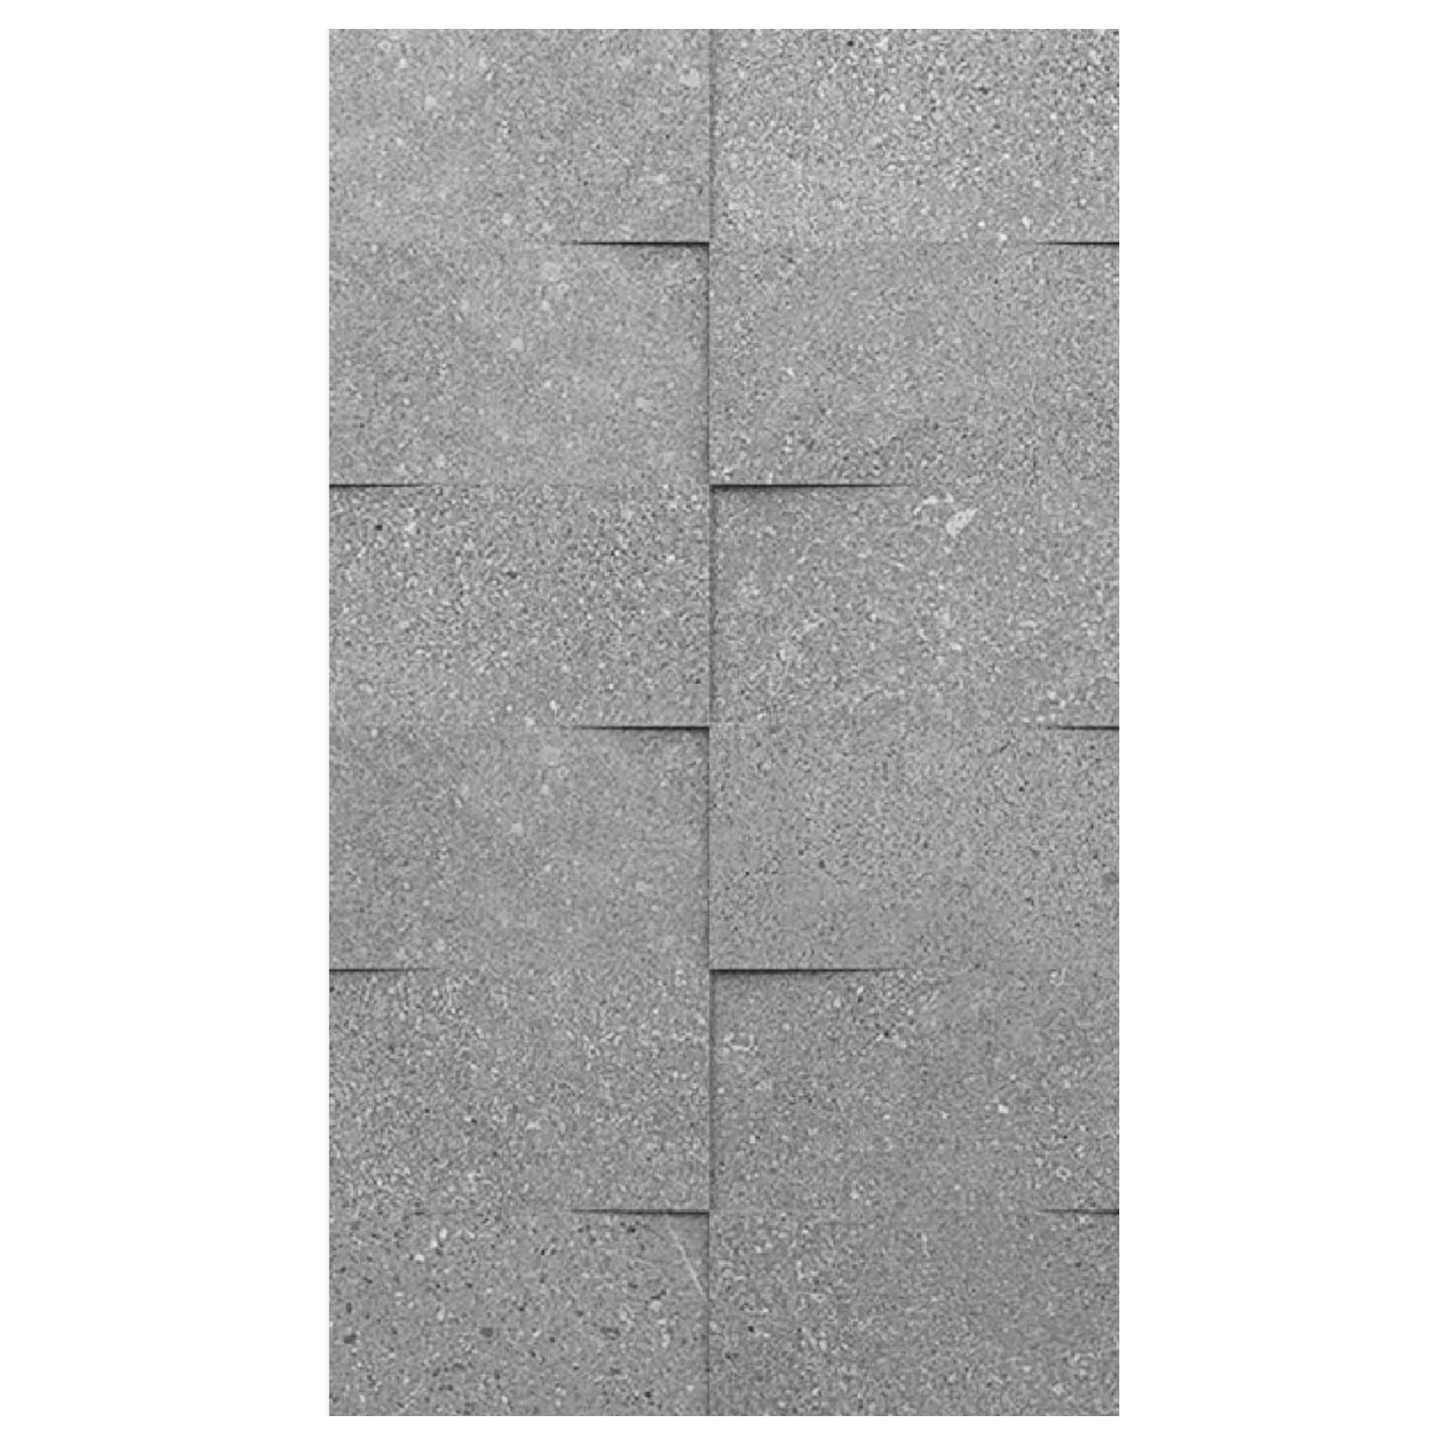 Maddox Stone Tile